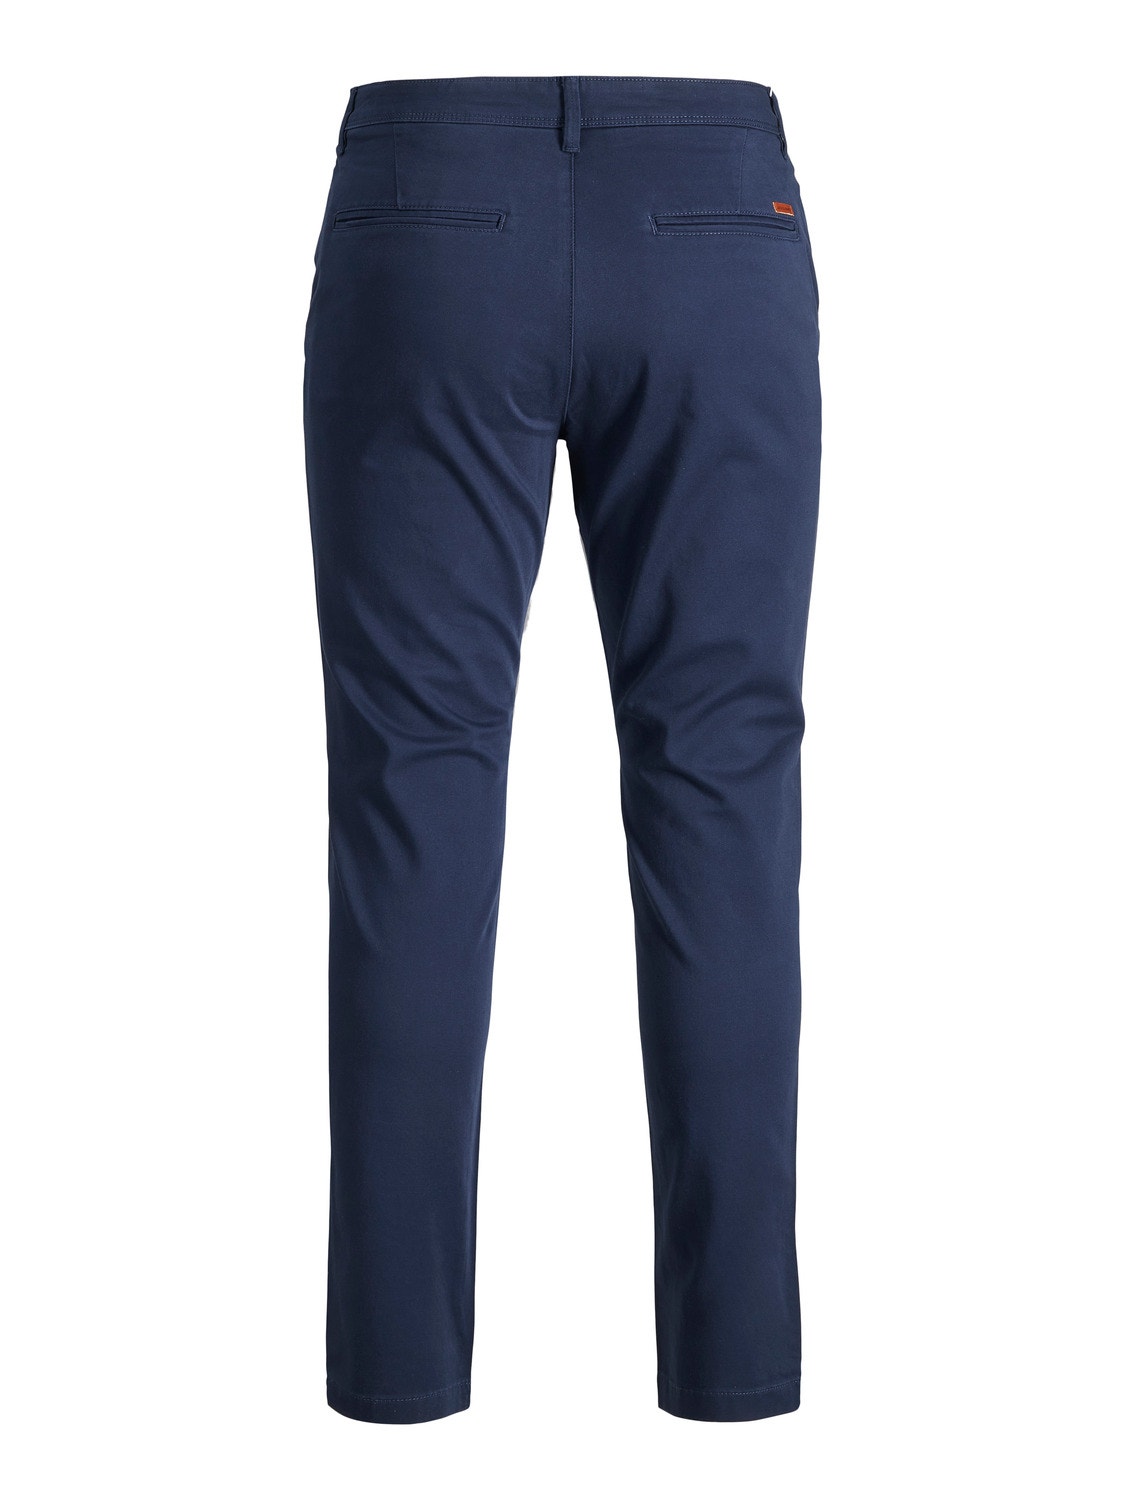 Jack & Jones Puuvillased püksid Junior -Navy Blazer - 12160028